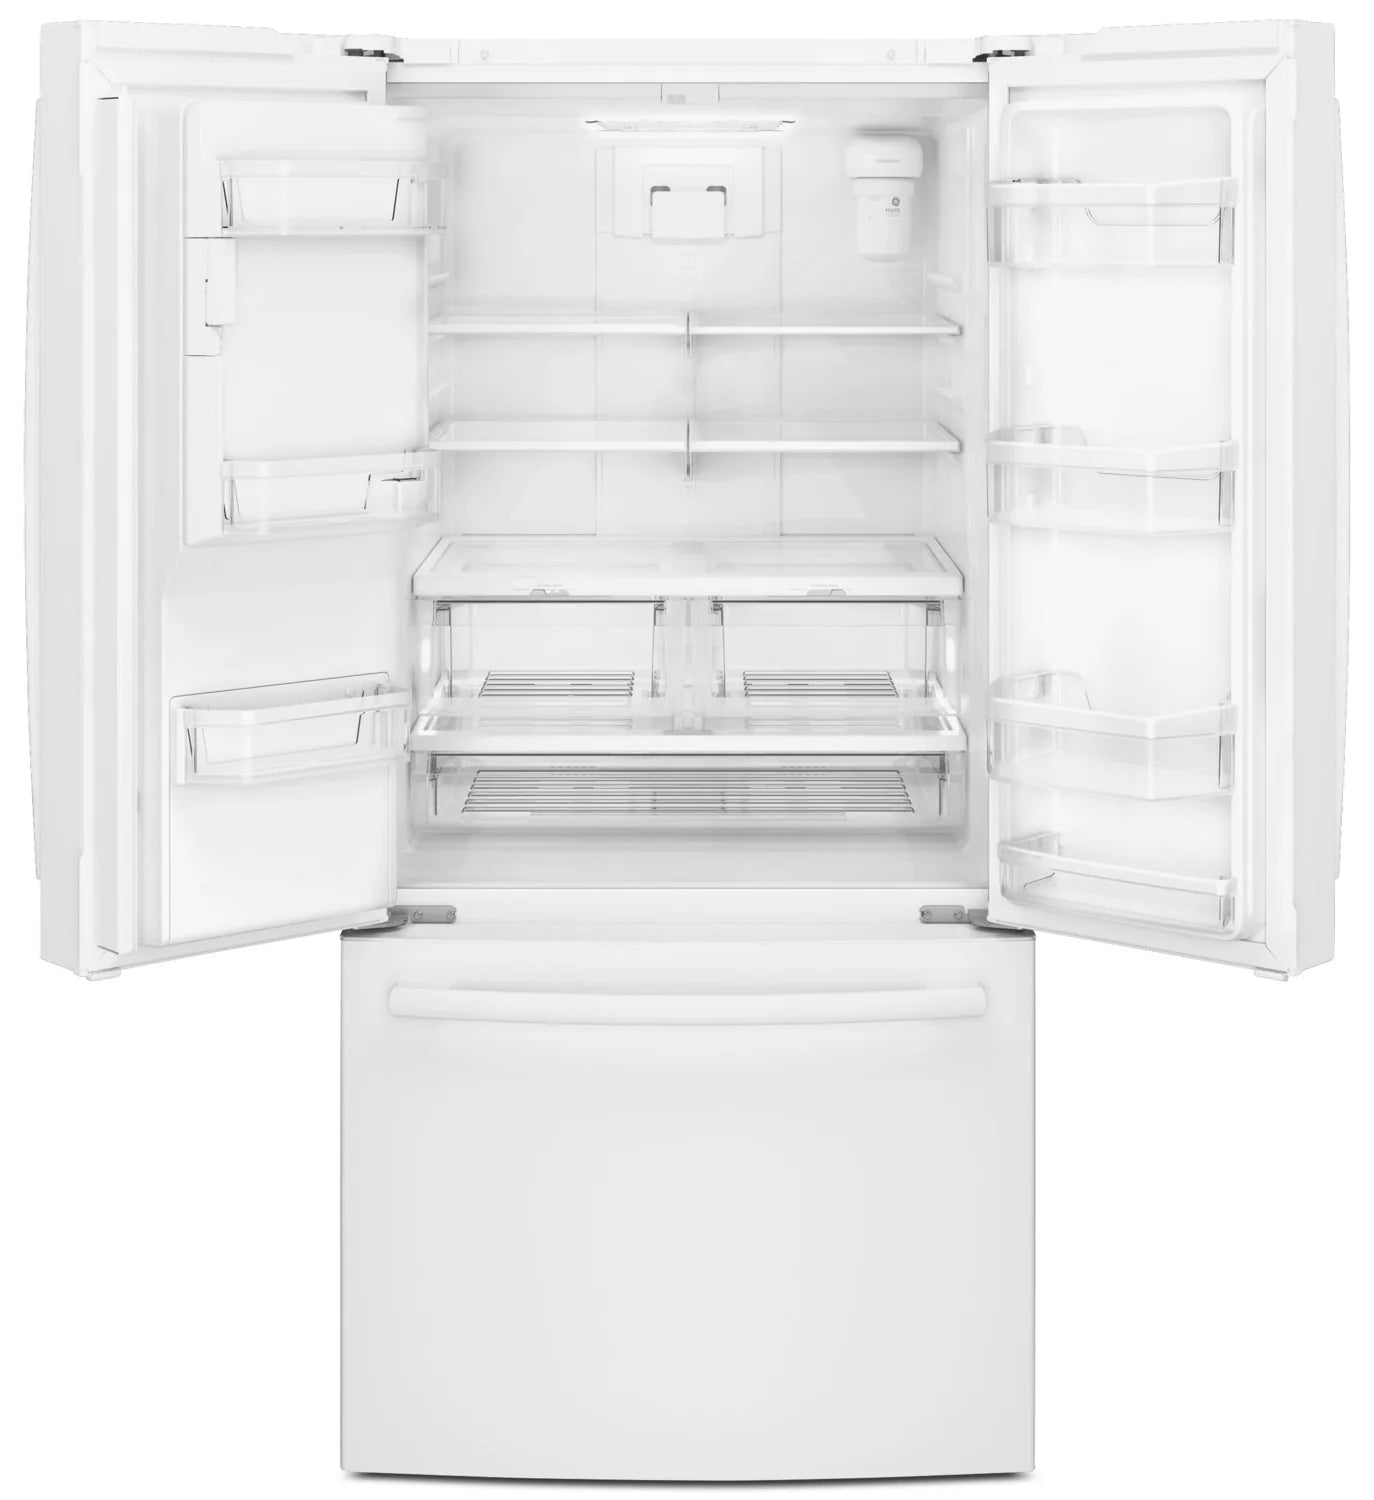 GE Refrigerator 33" White PFE24JGKBKWW